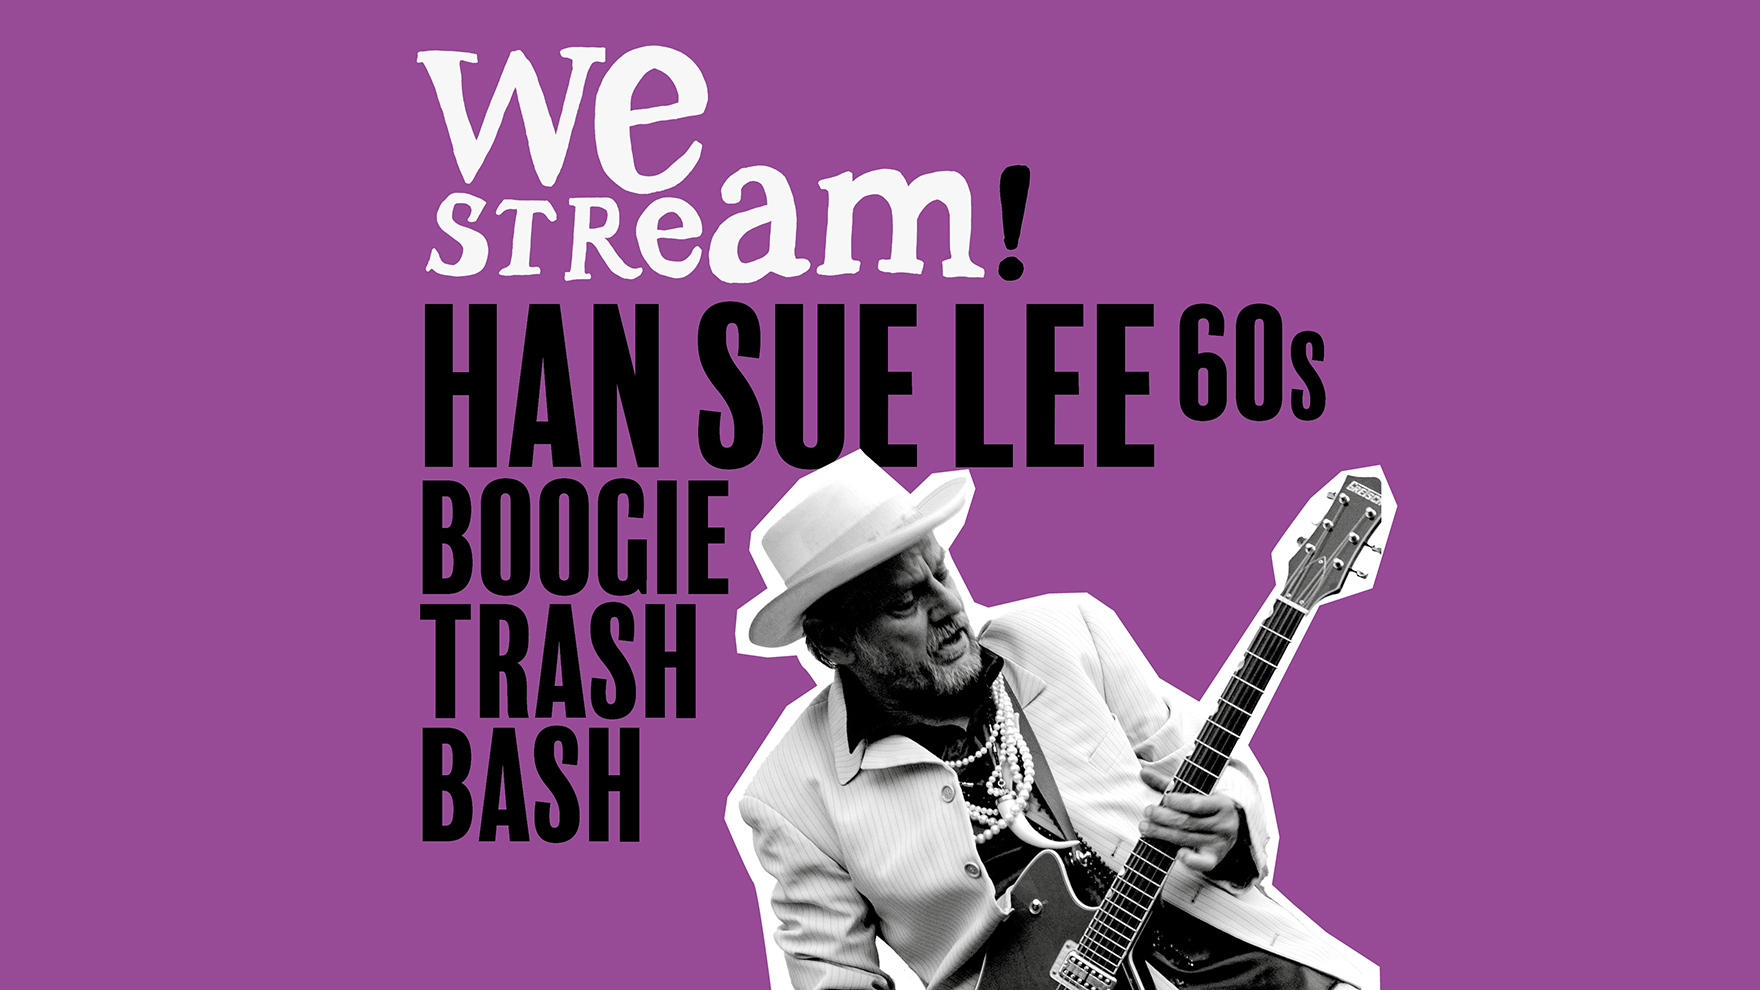 Han Sue Lee 60s BoogieTrashBash